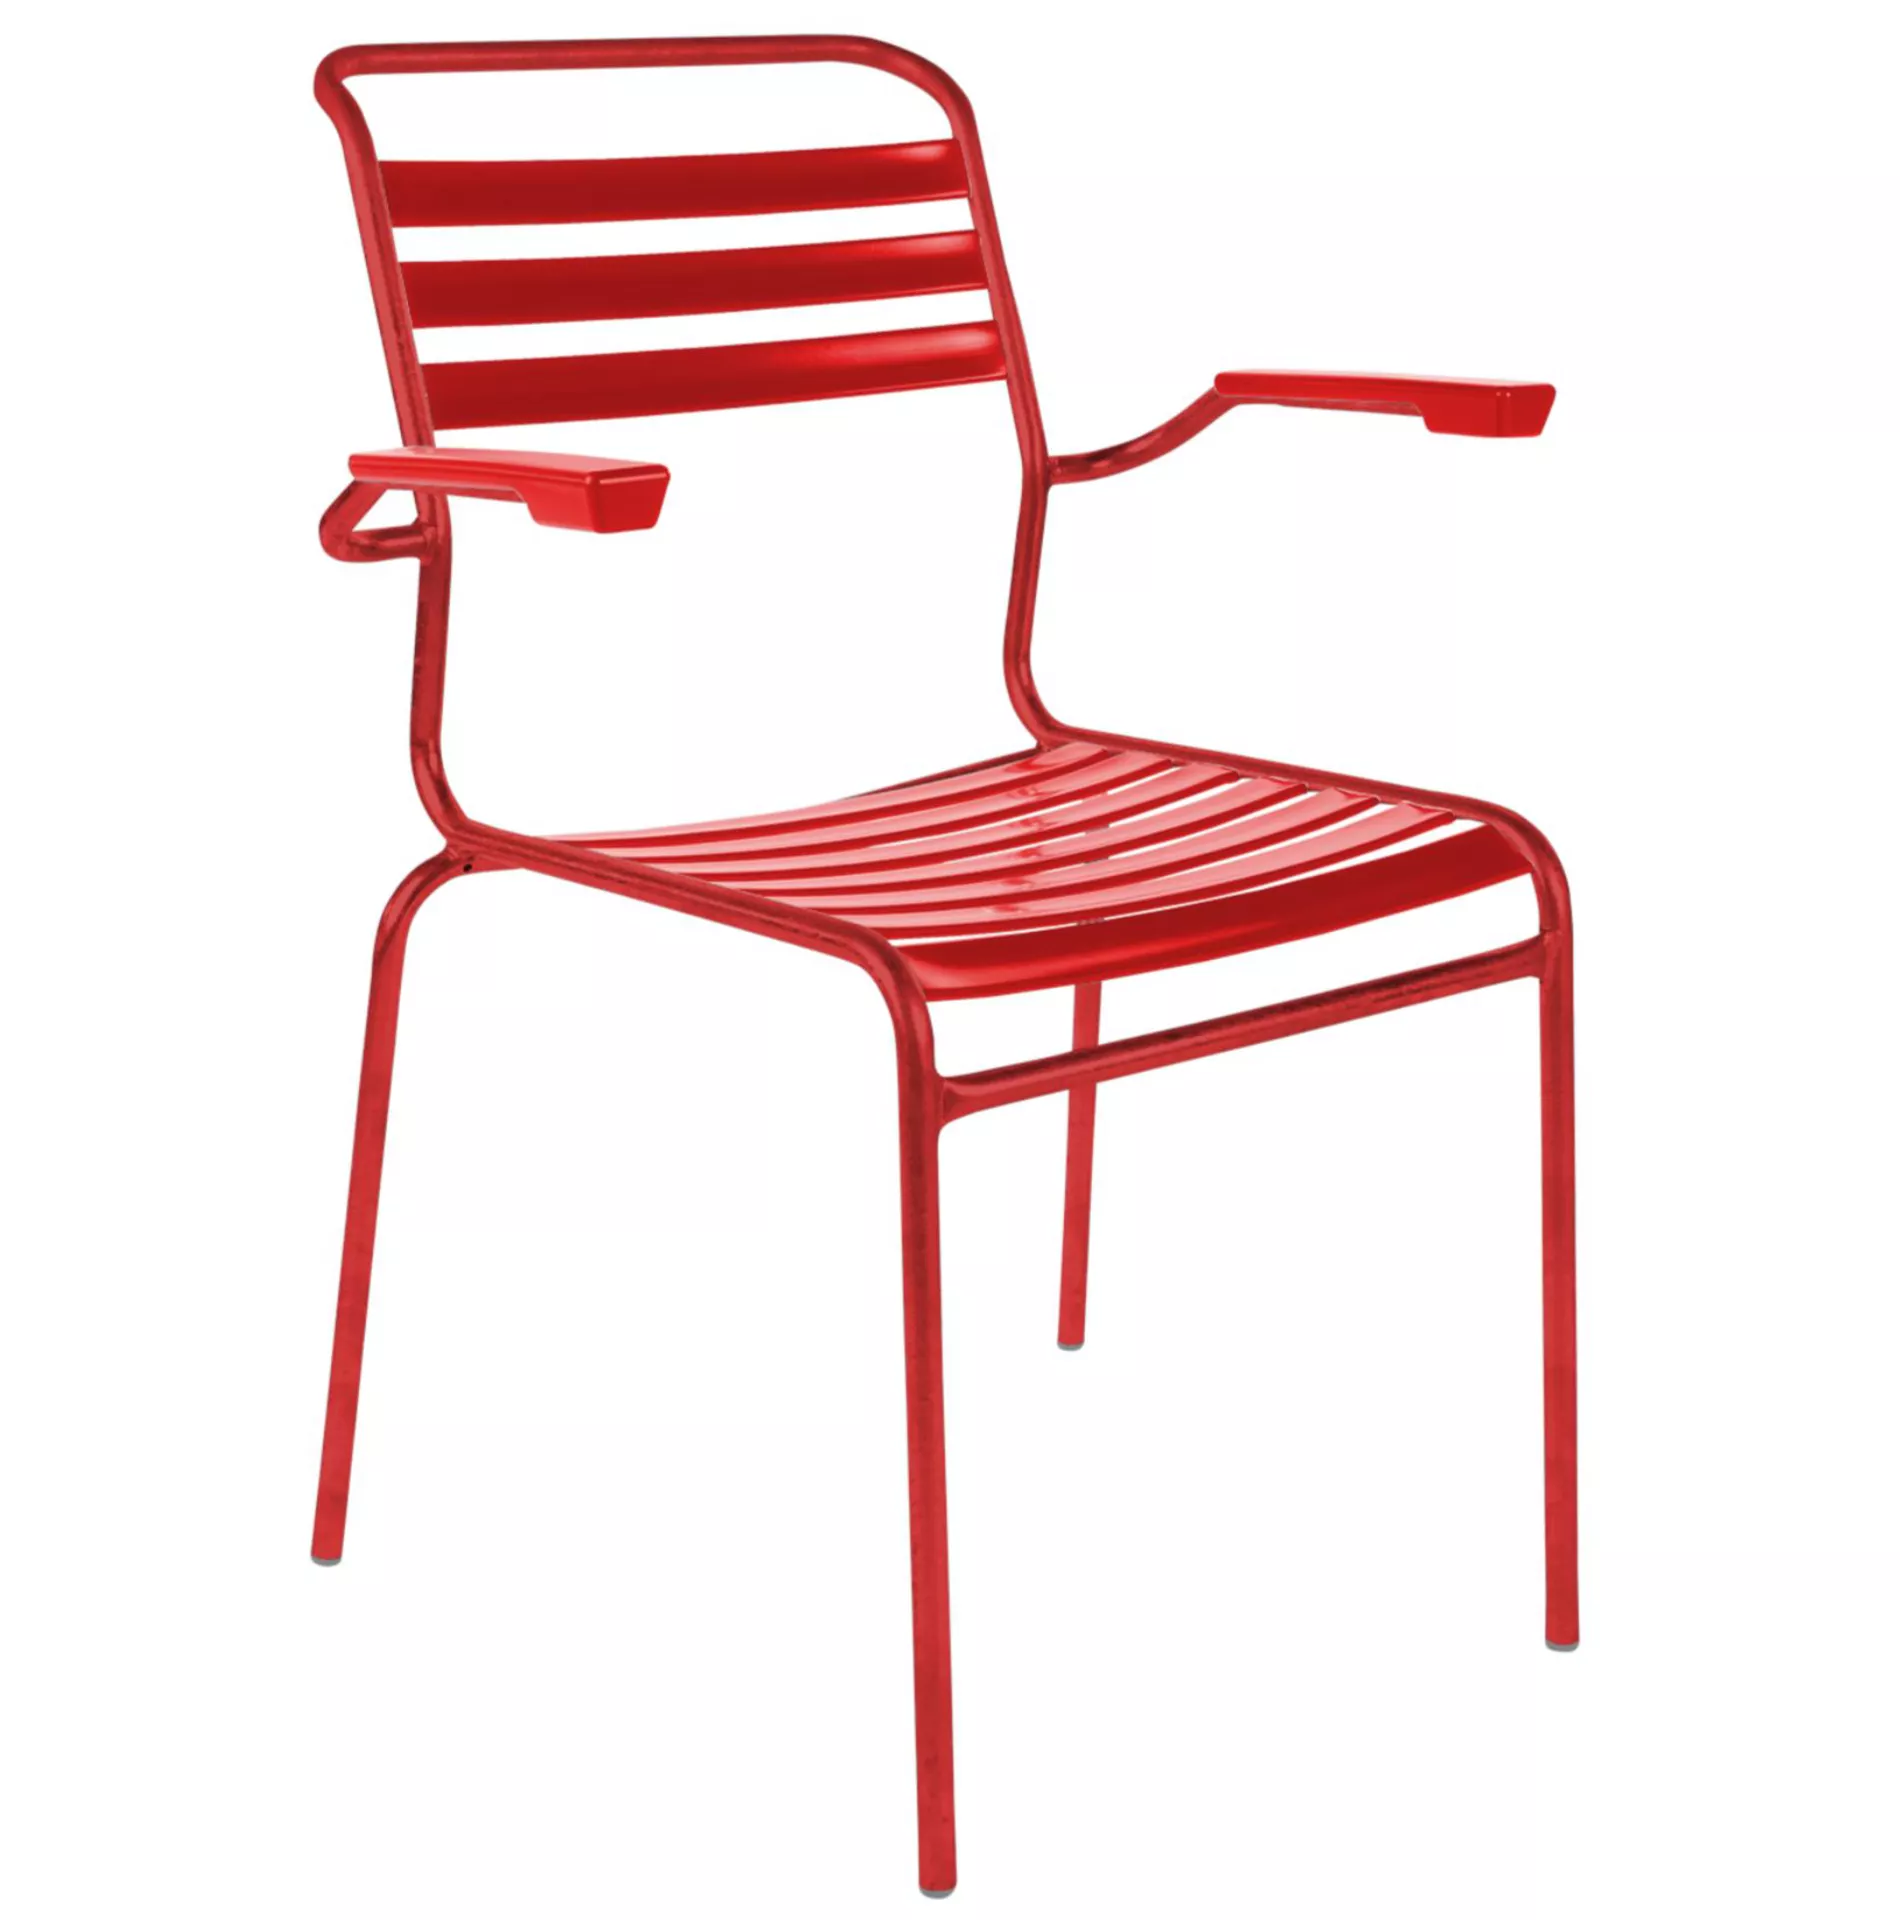 Lättli-Stuhl Säntis mit Armlehnen Schaffner / Farbe: Rot